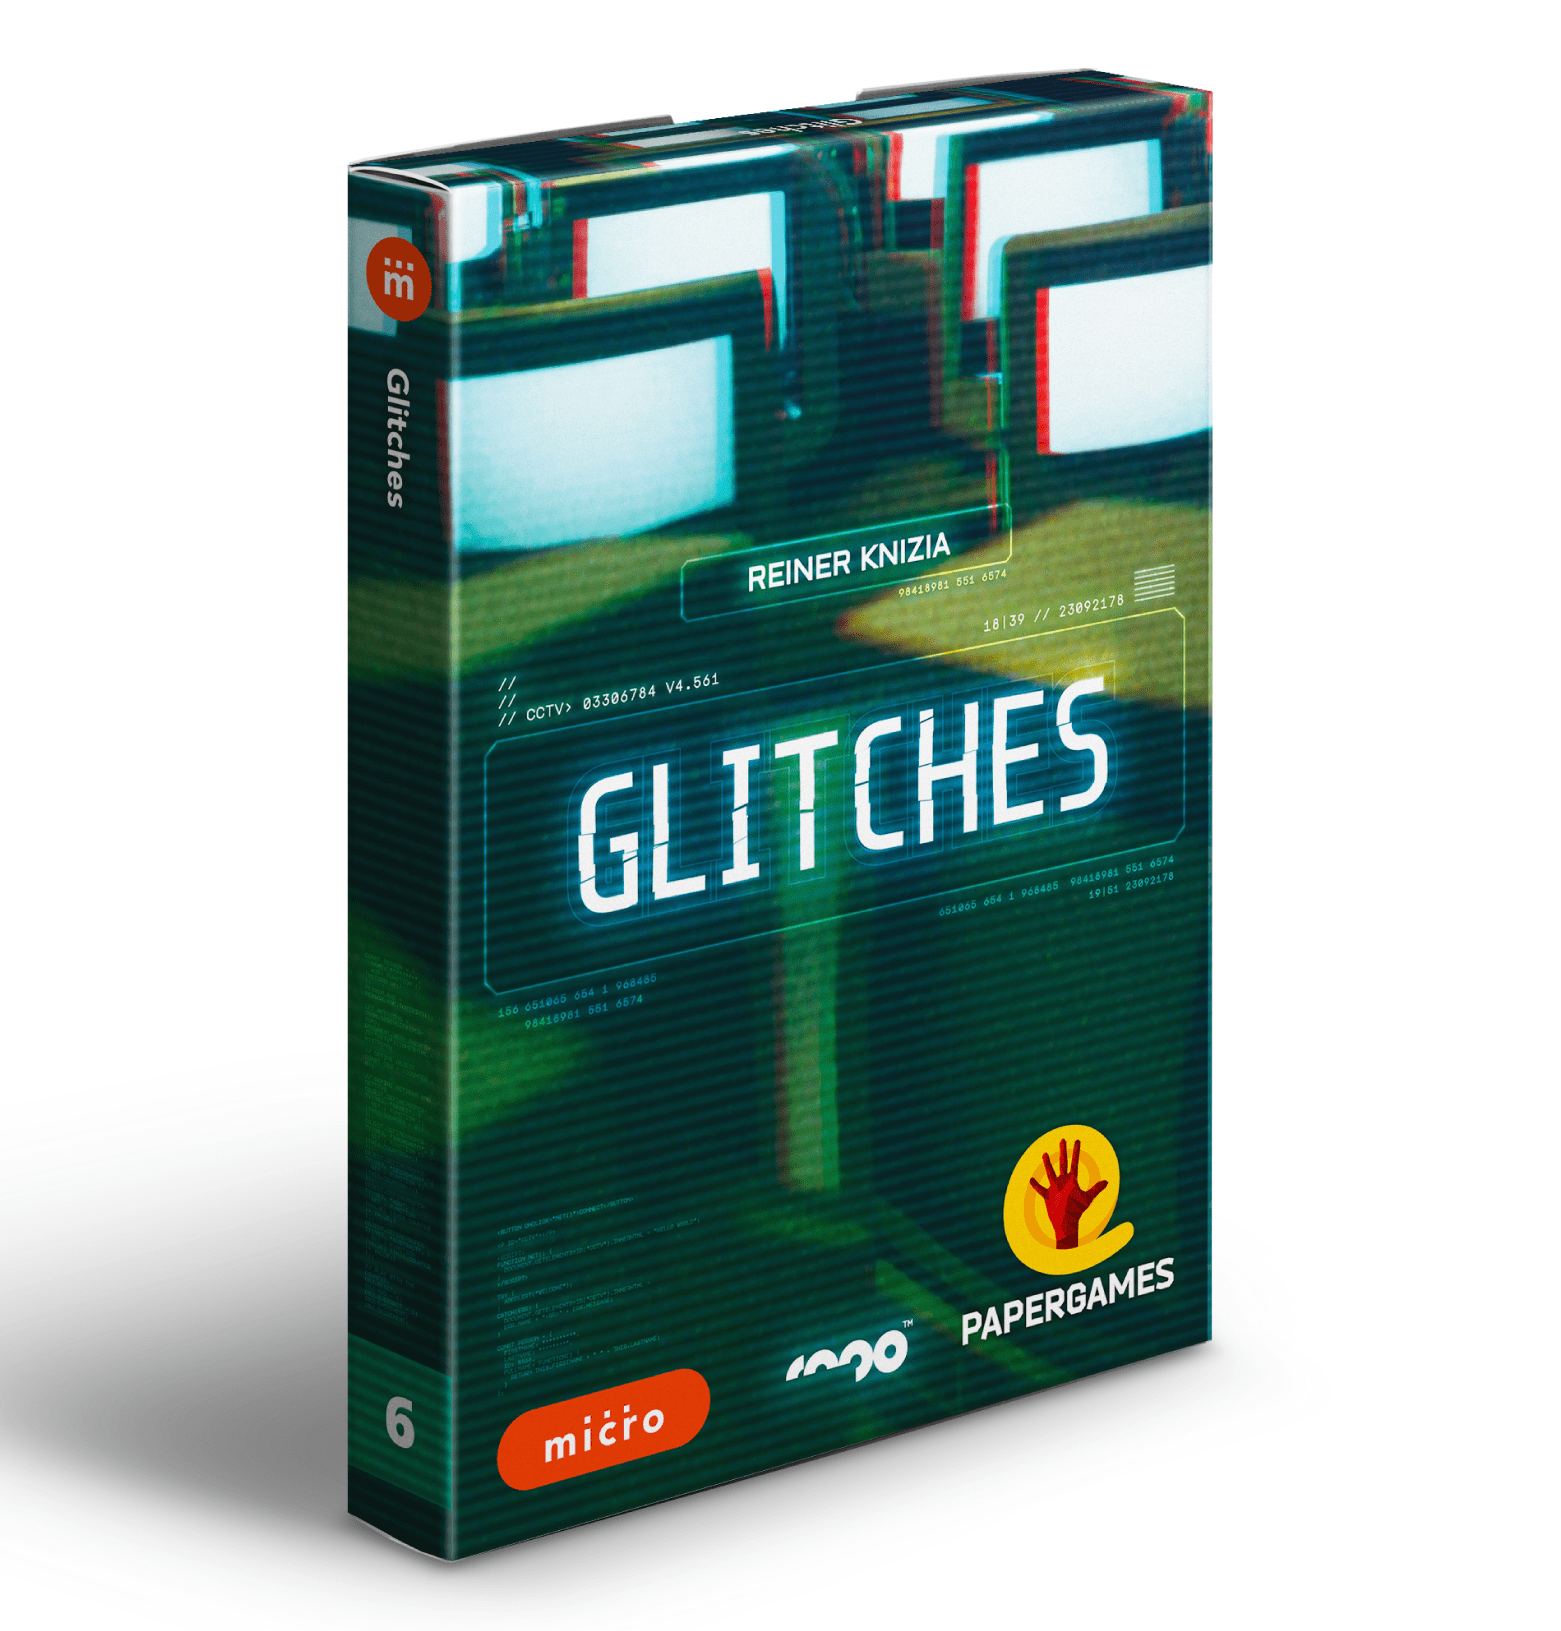 Jogo Glitches + Caixa Micro Box + Carta Promocional Full Duplex